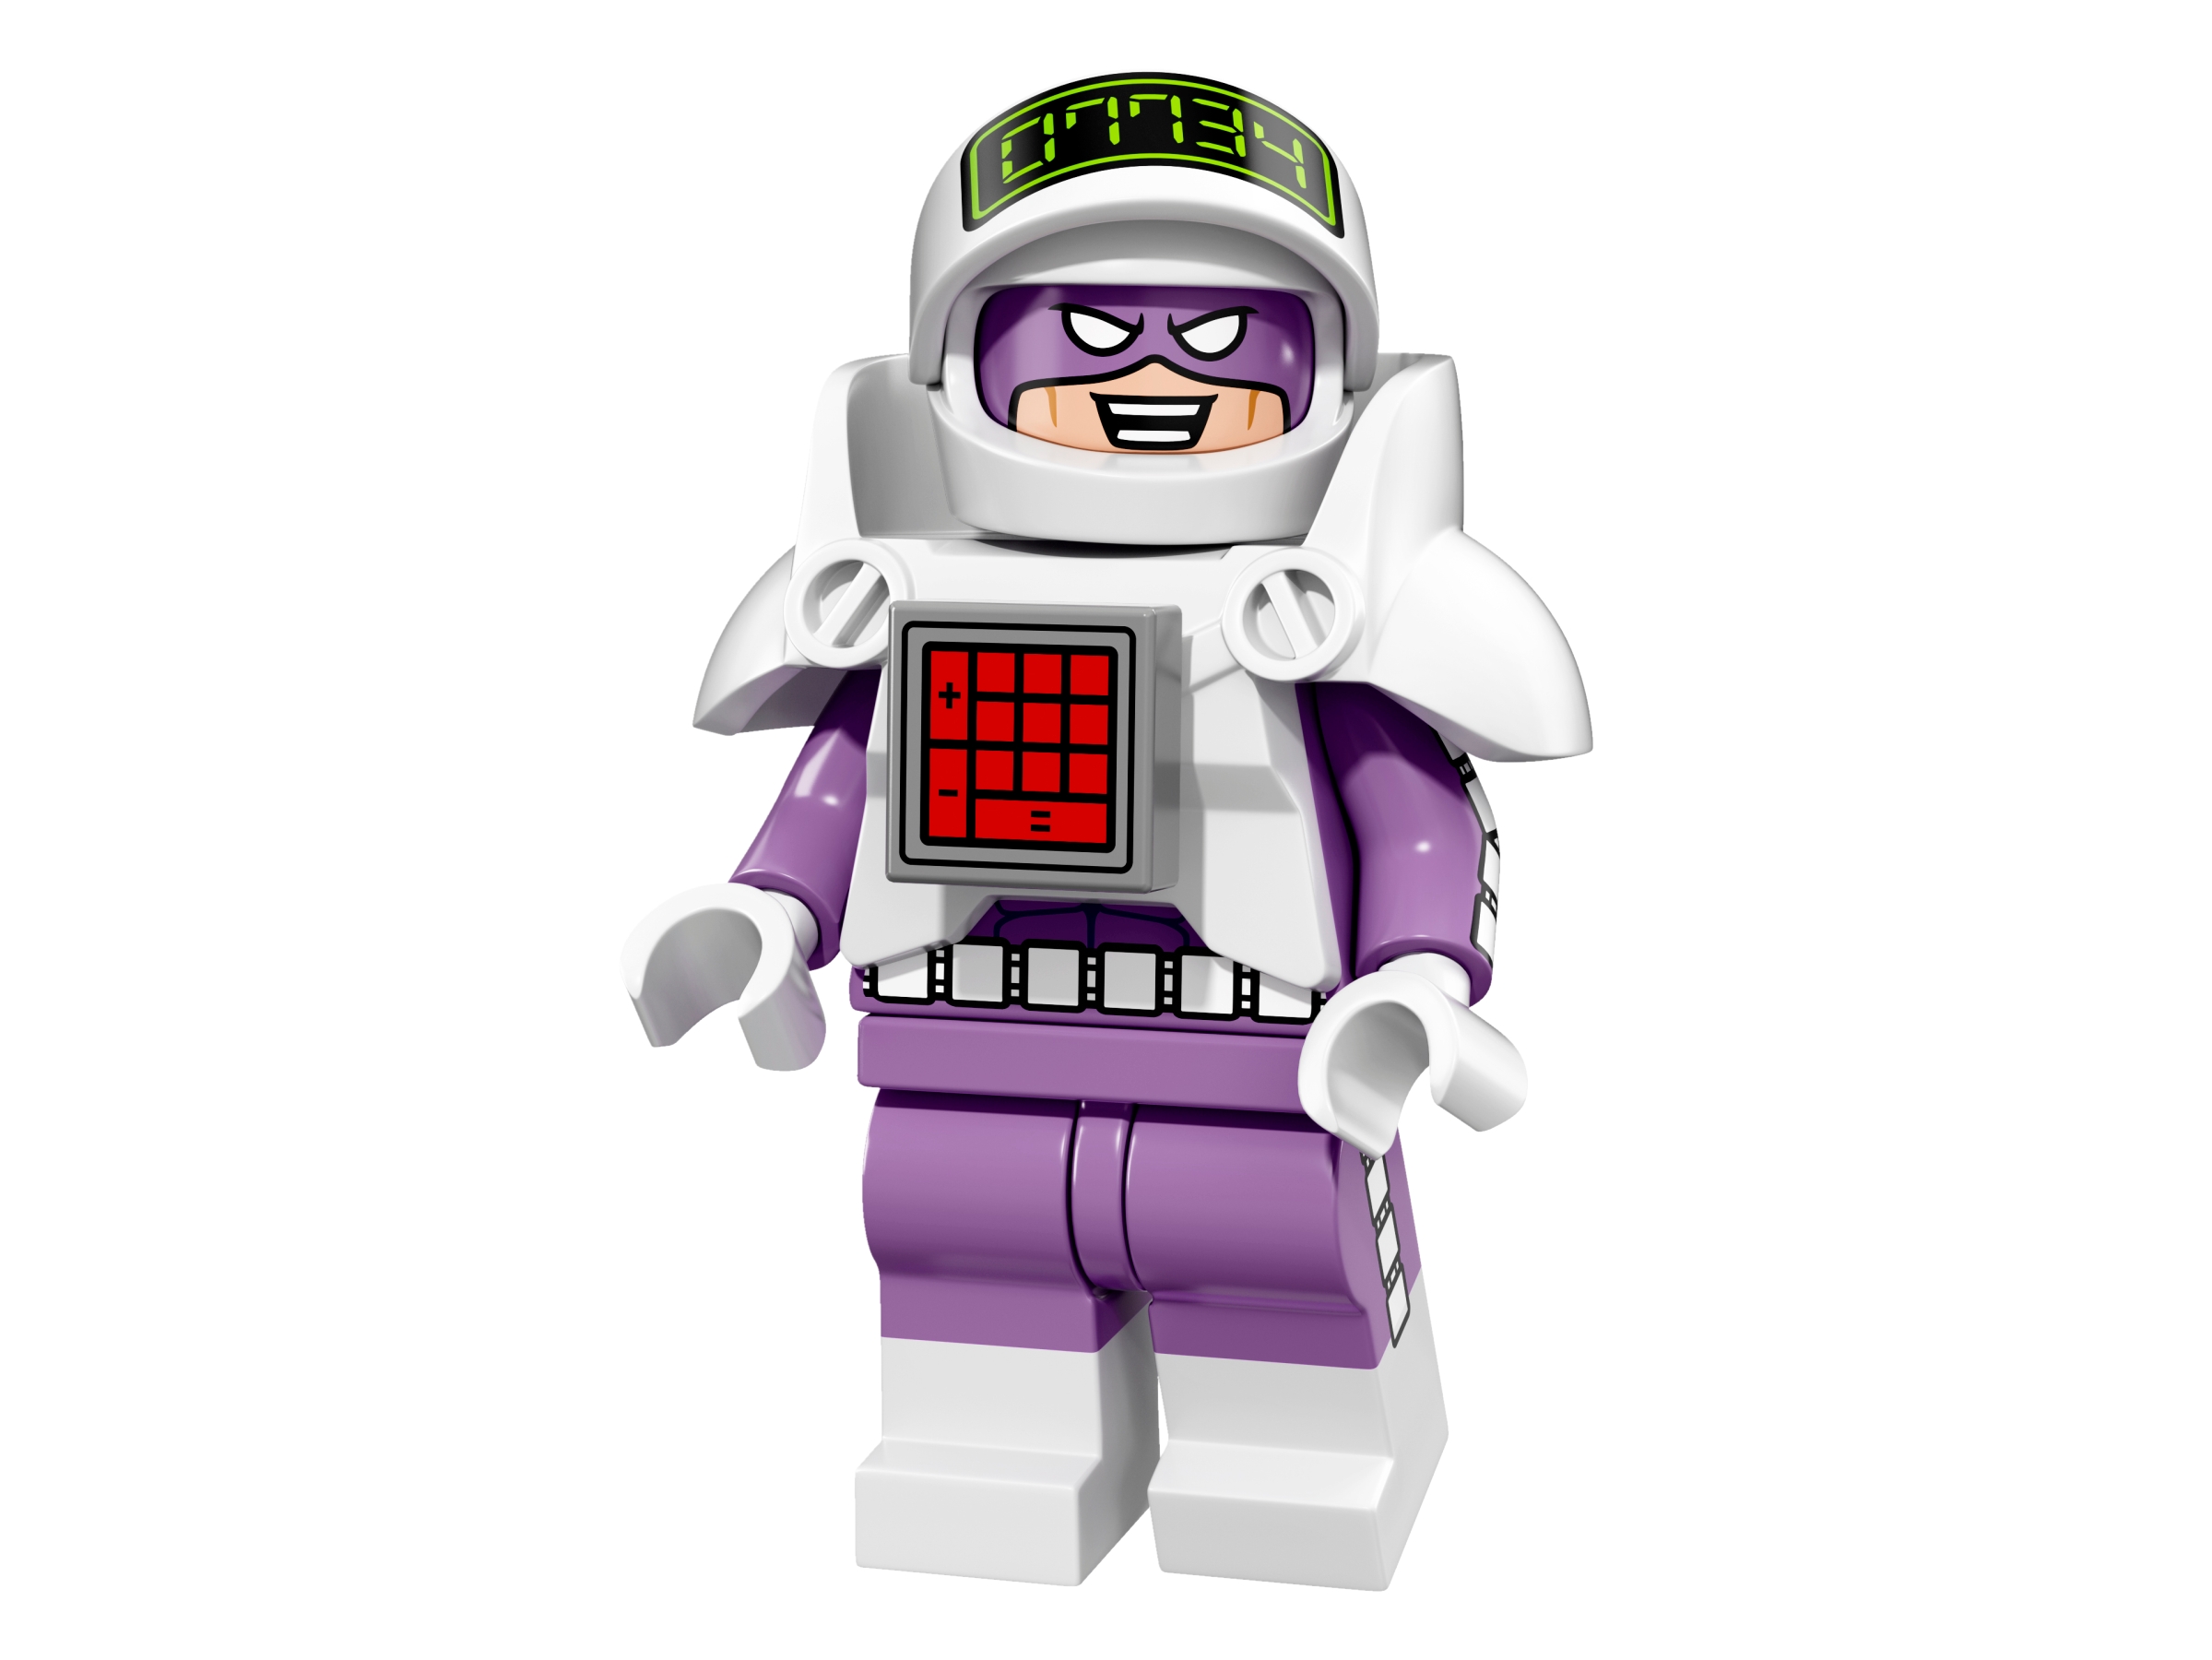 LEGO NEW BATMAN MOVIE SERIES Commissioner Gordon MINIFIGURE 71017 FIGURE 